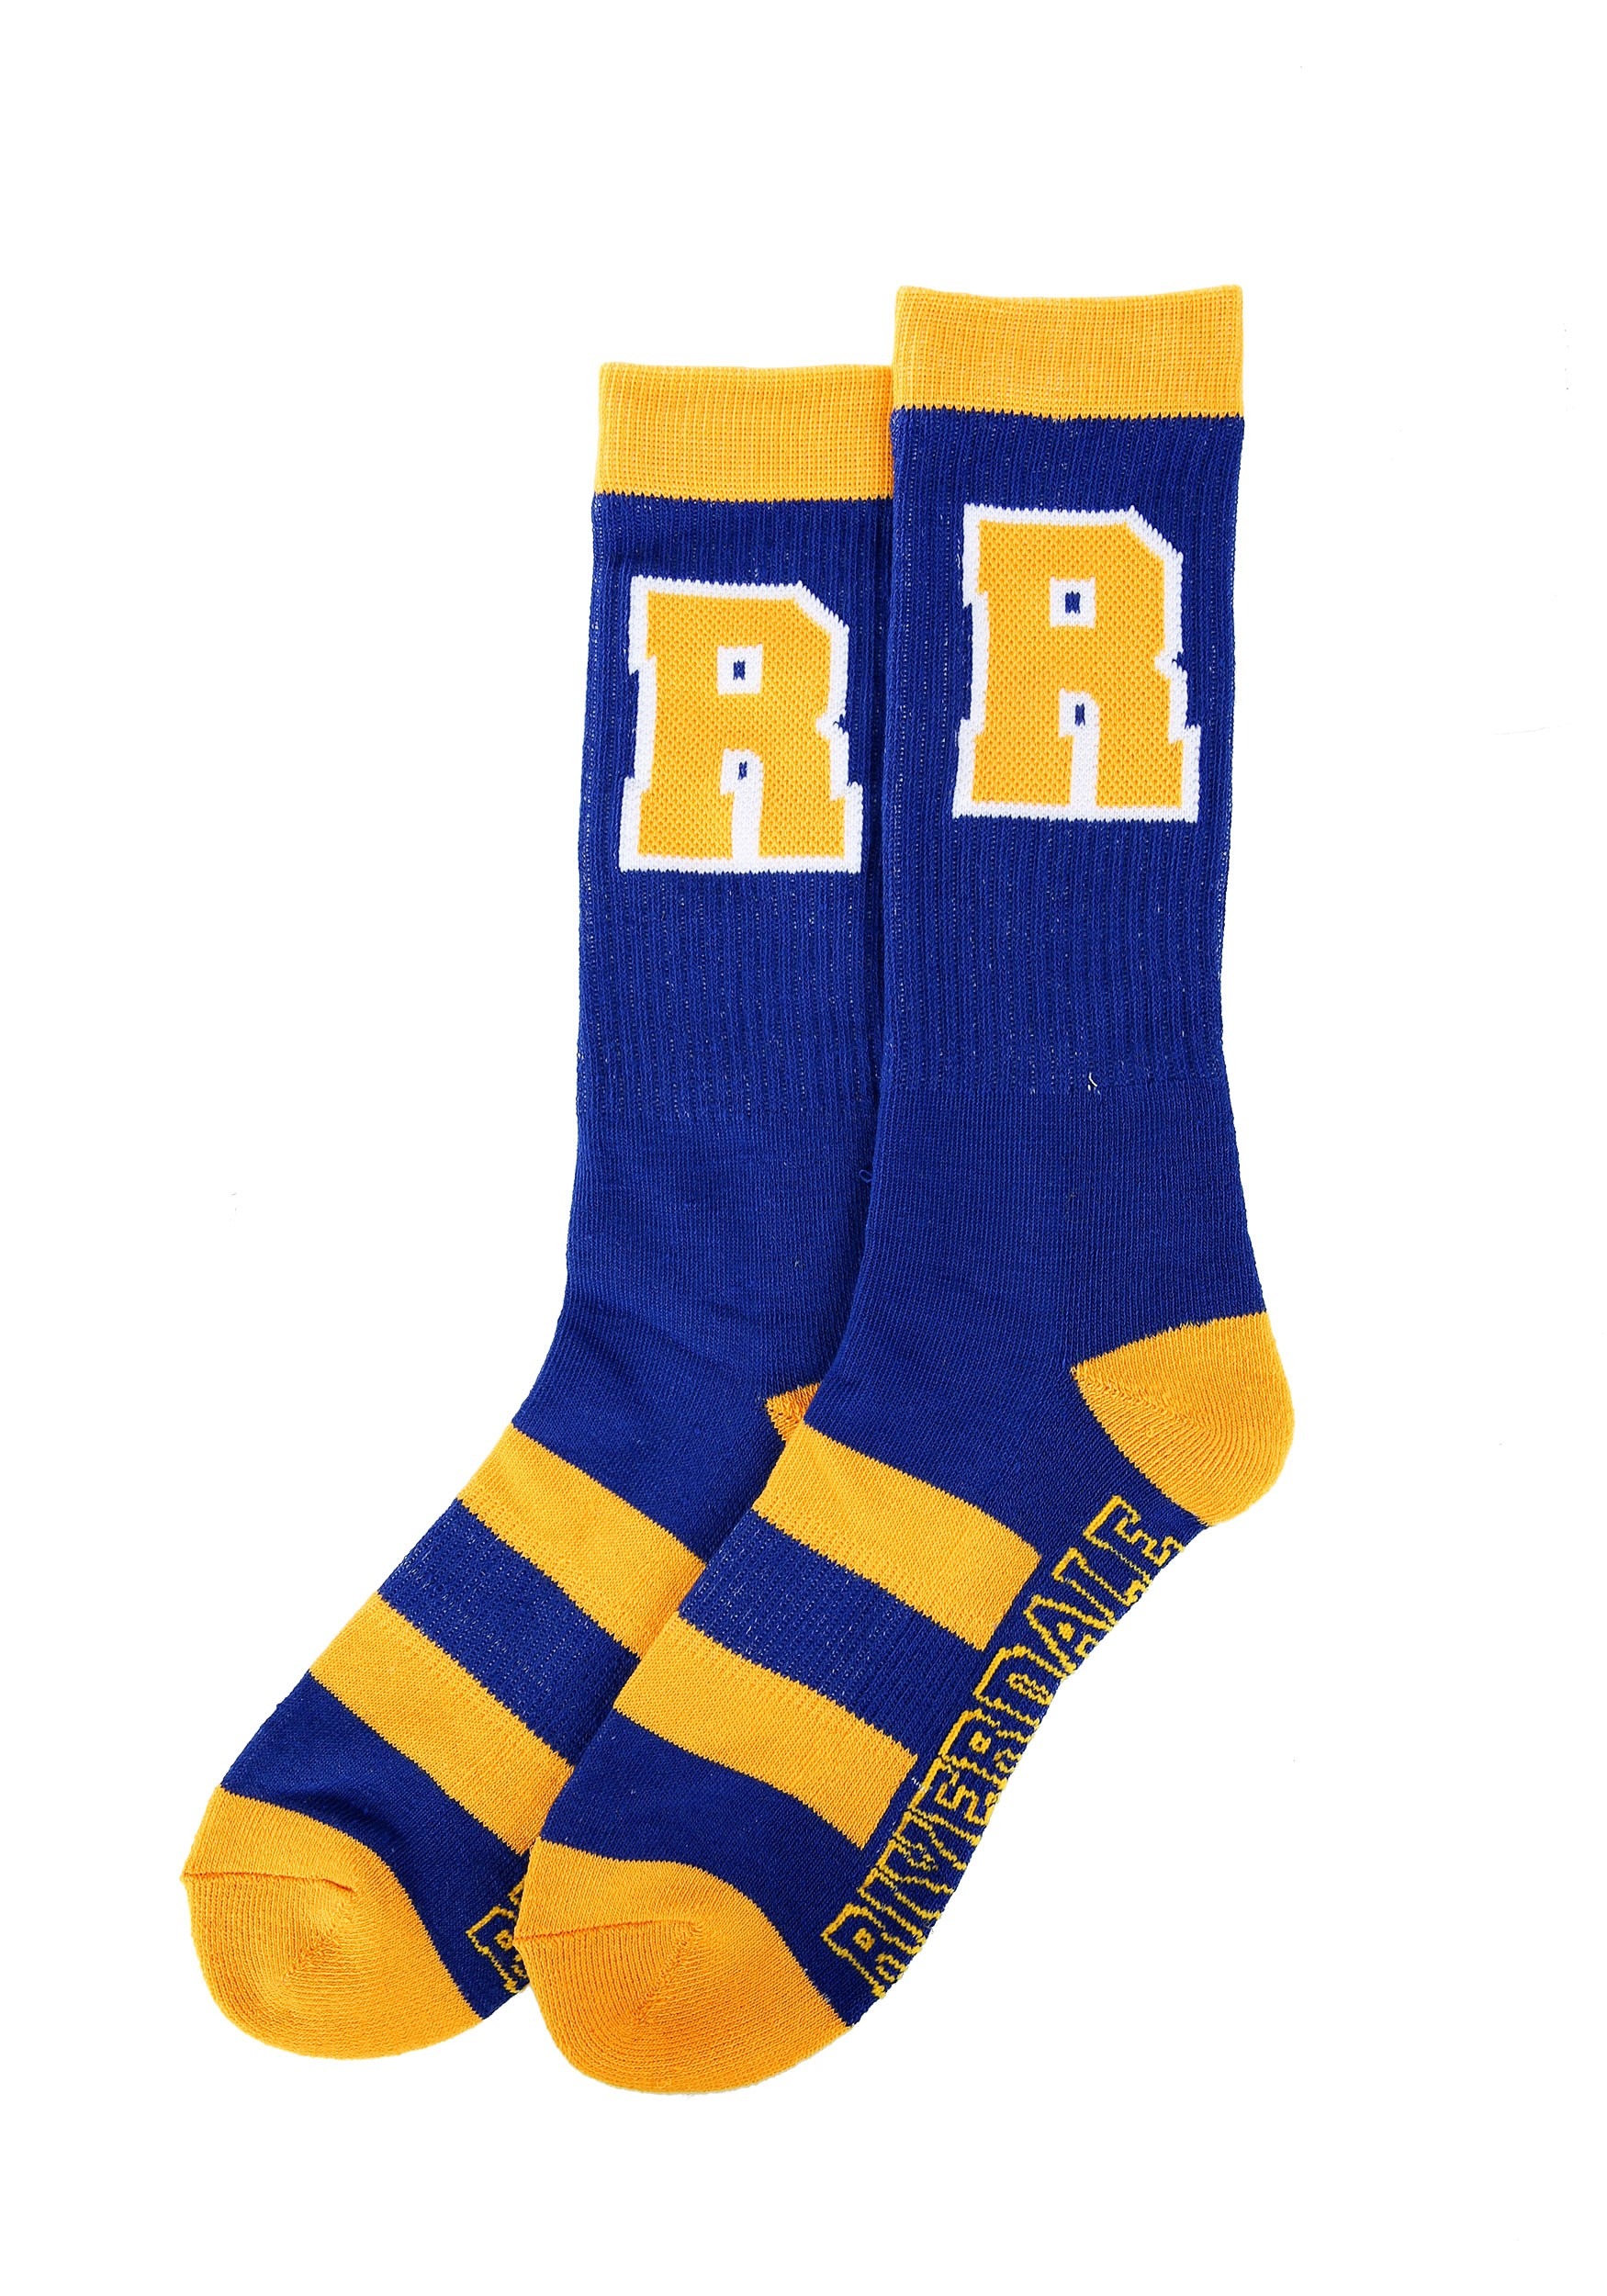 R Crew Riverdale Socks